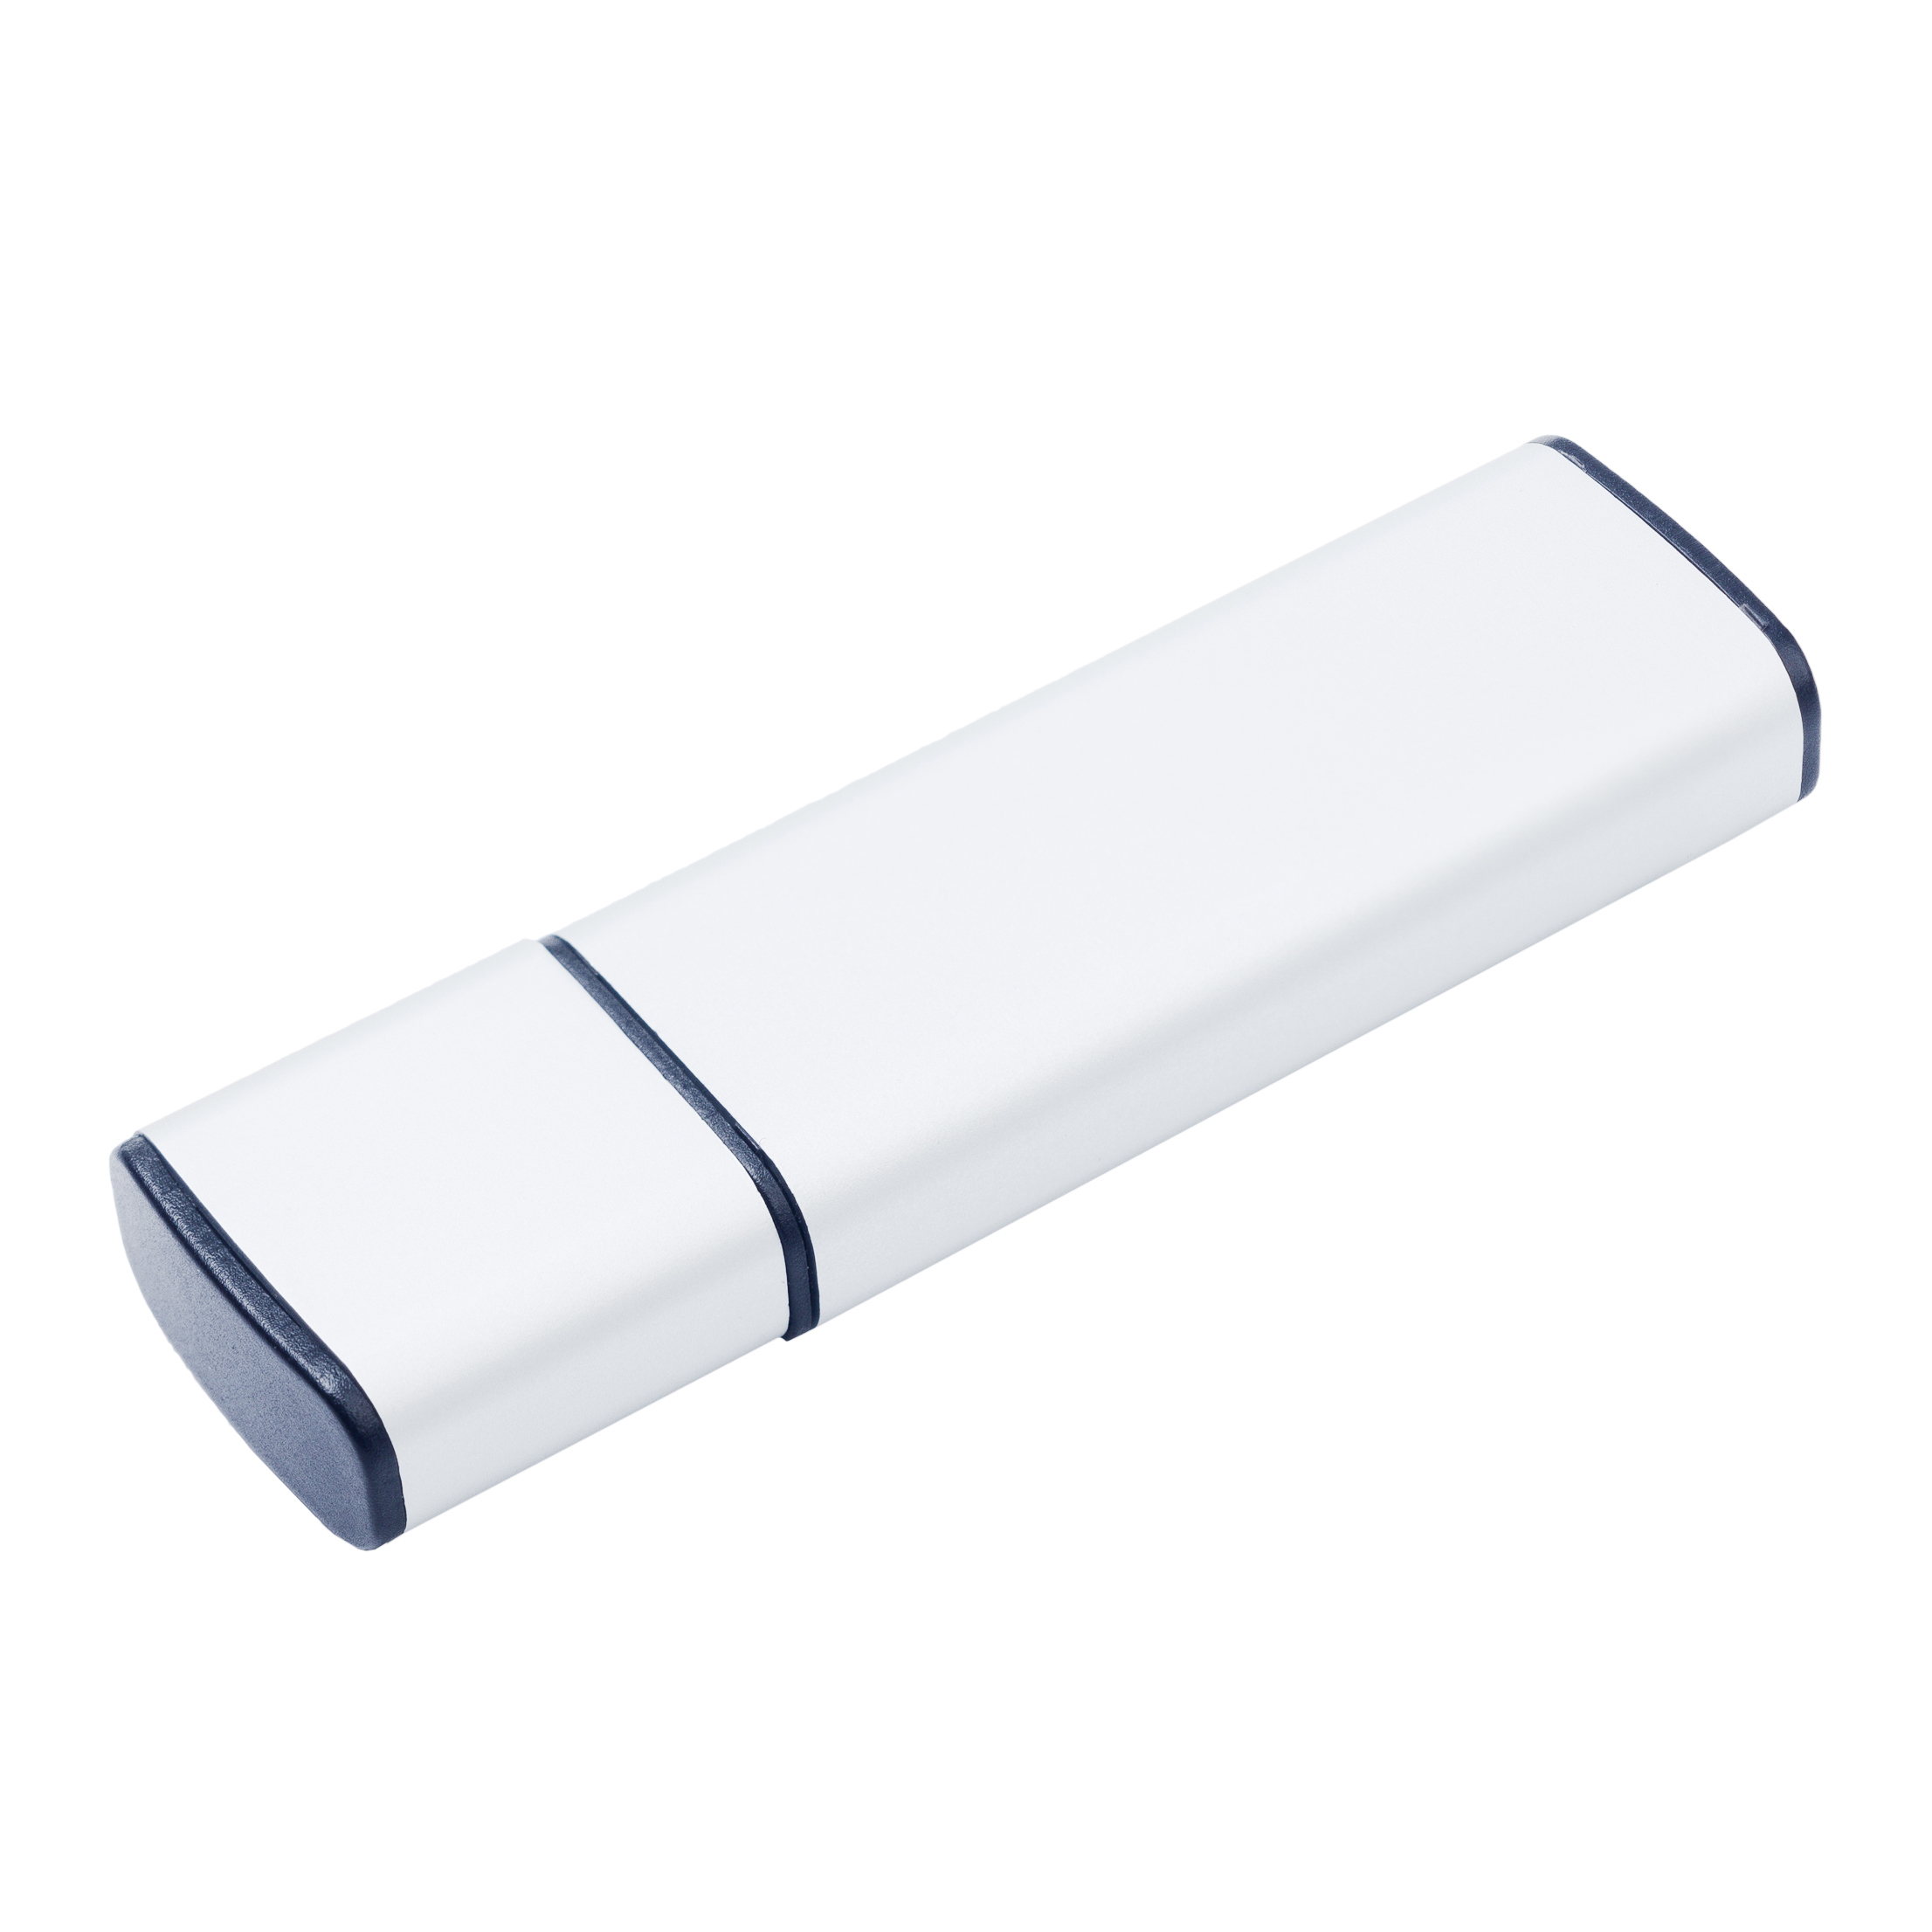 USB-флешка модель 122, (USB 3.0), объем памяти 128 GB, цвет белый